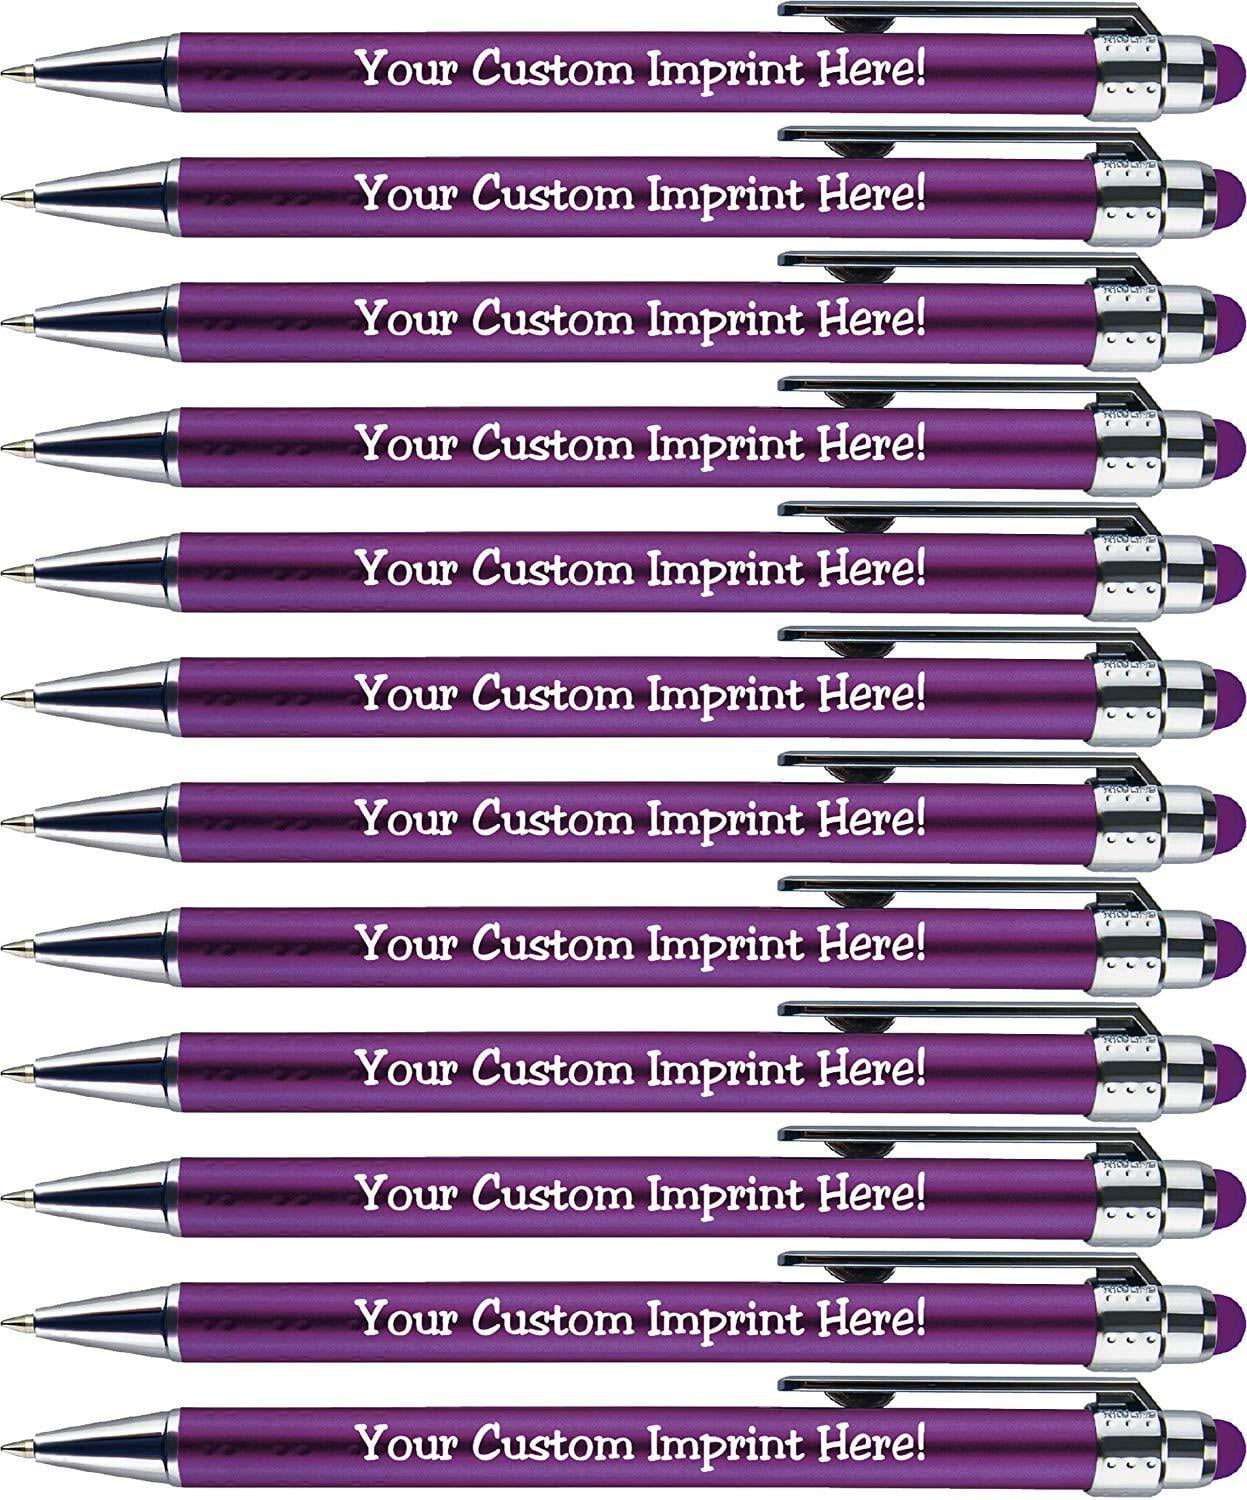 Name pens Personalized pens Stylus pen 12 Custom Printed bright light pens 